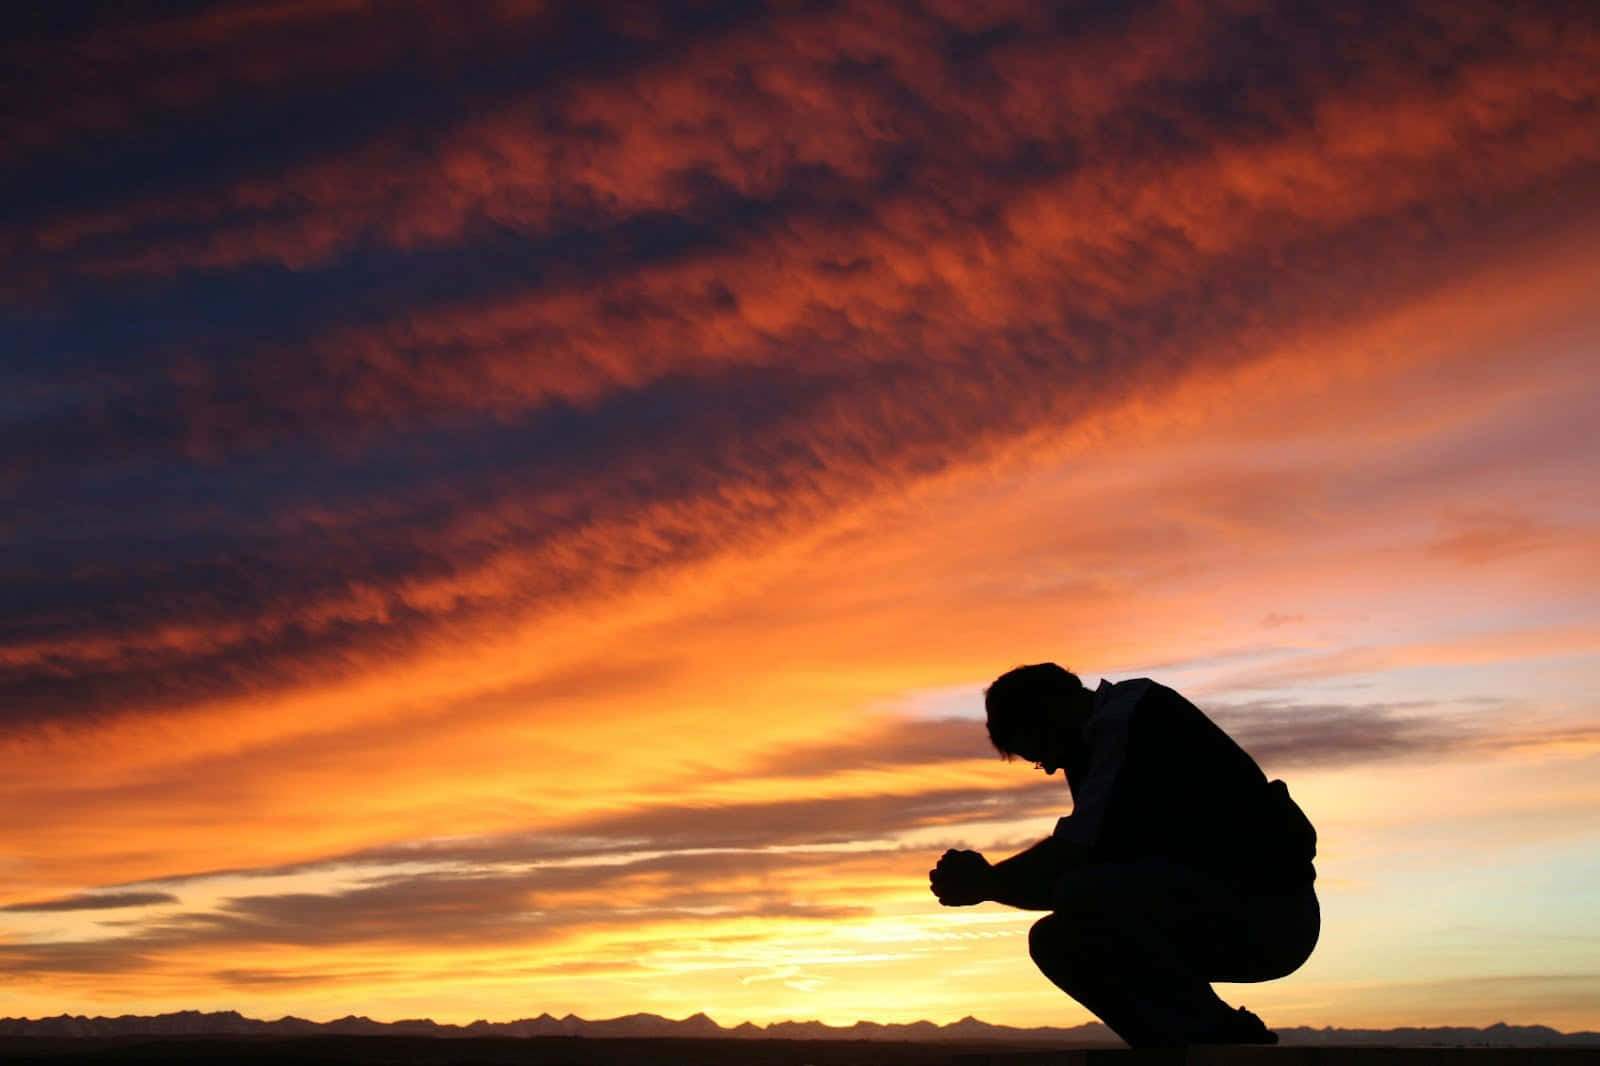 Man passionately praying at sunrise